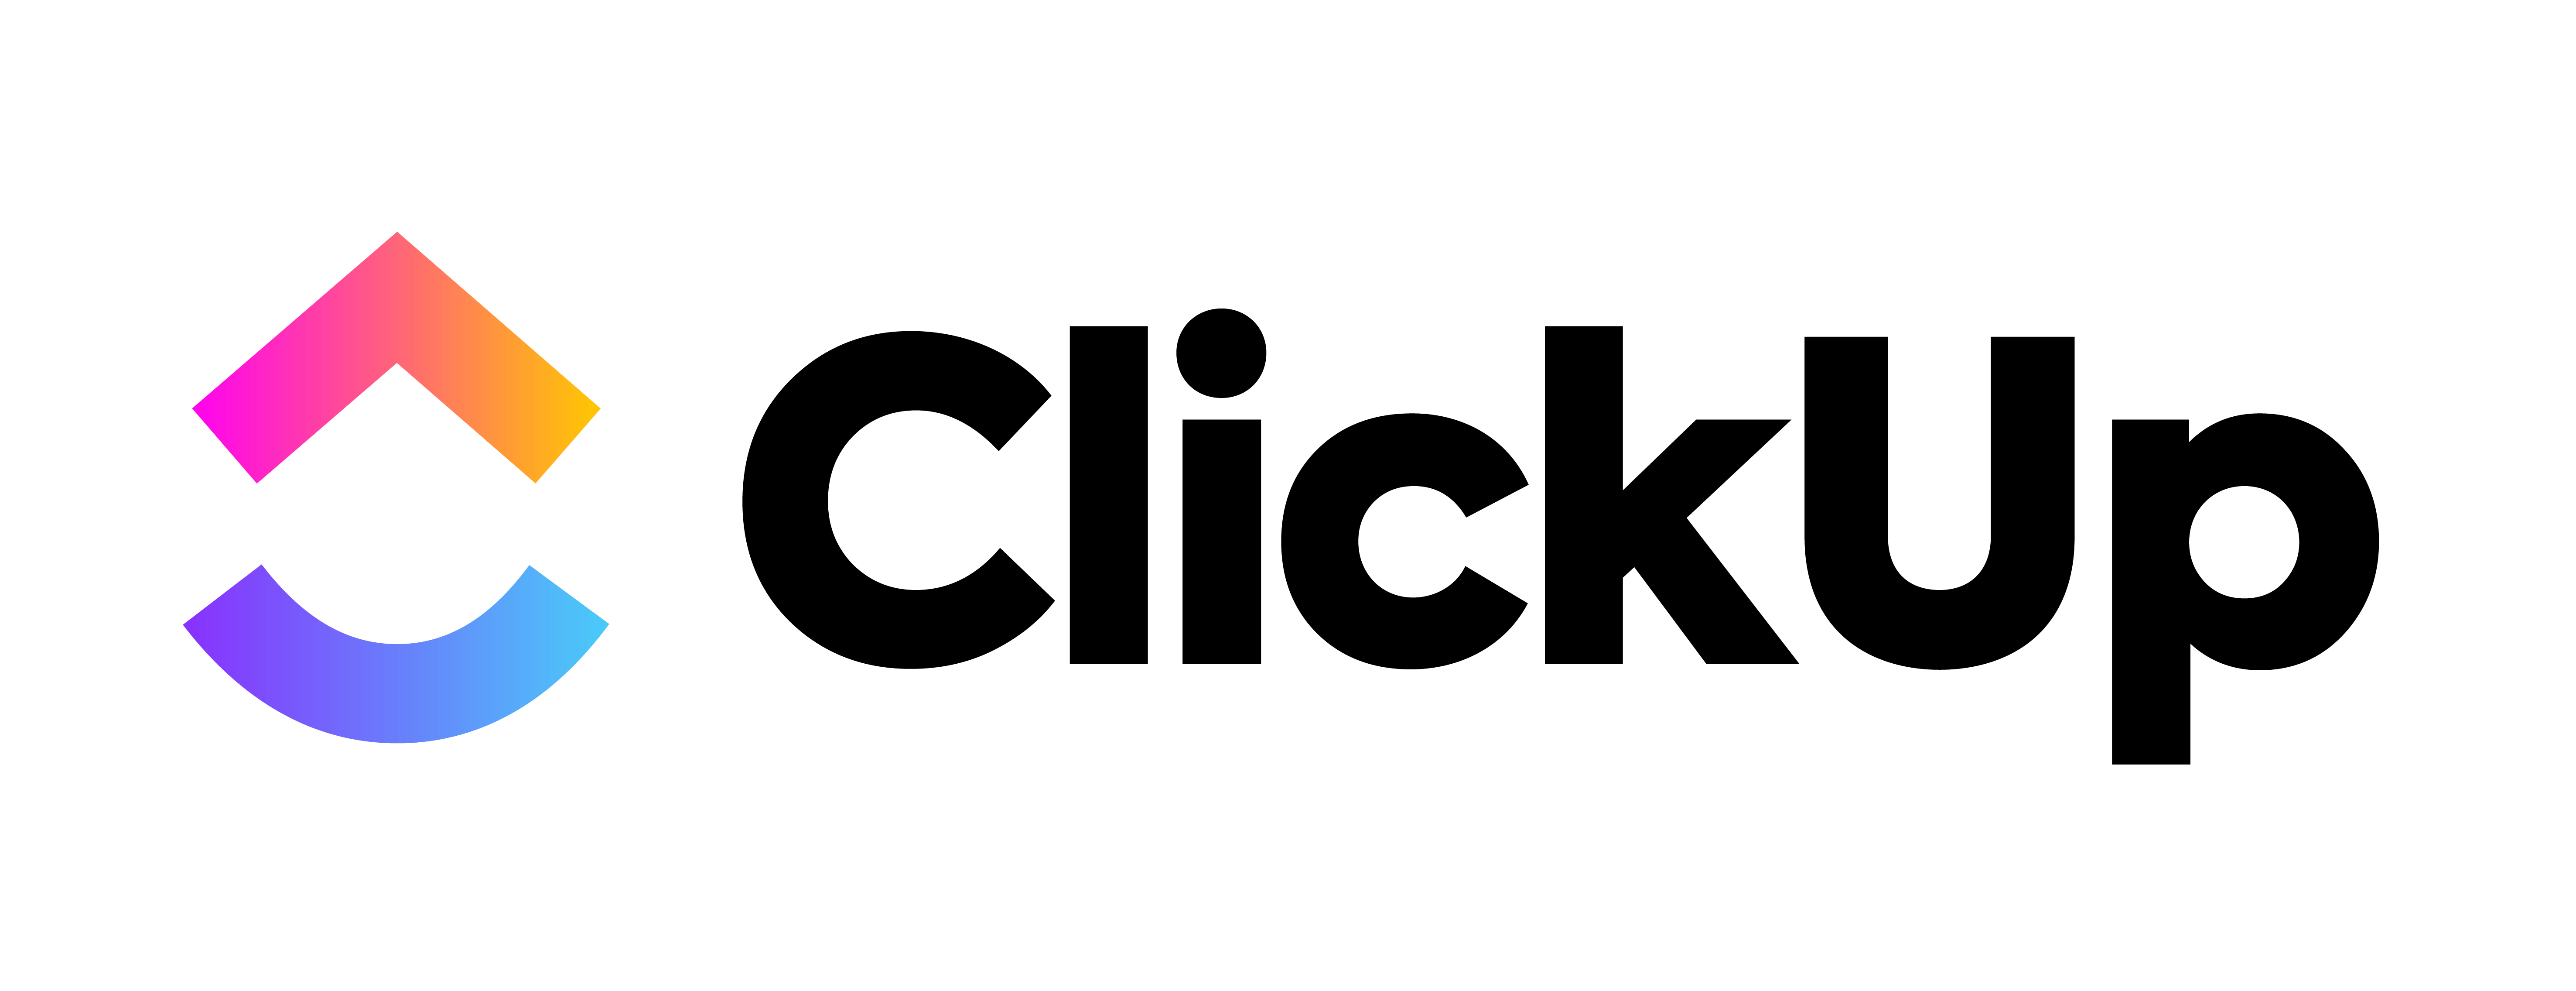 clickup-logo-text